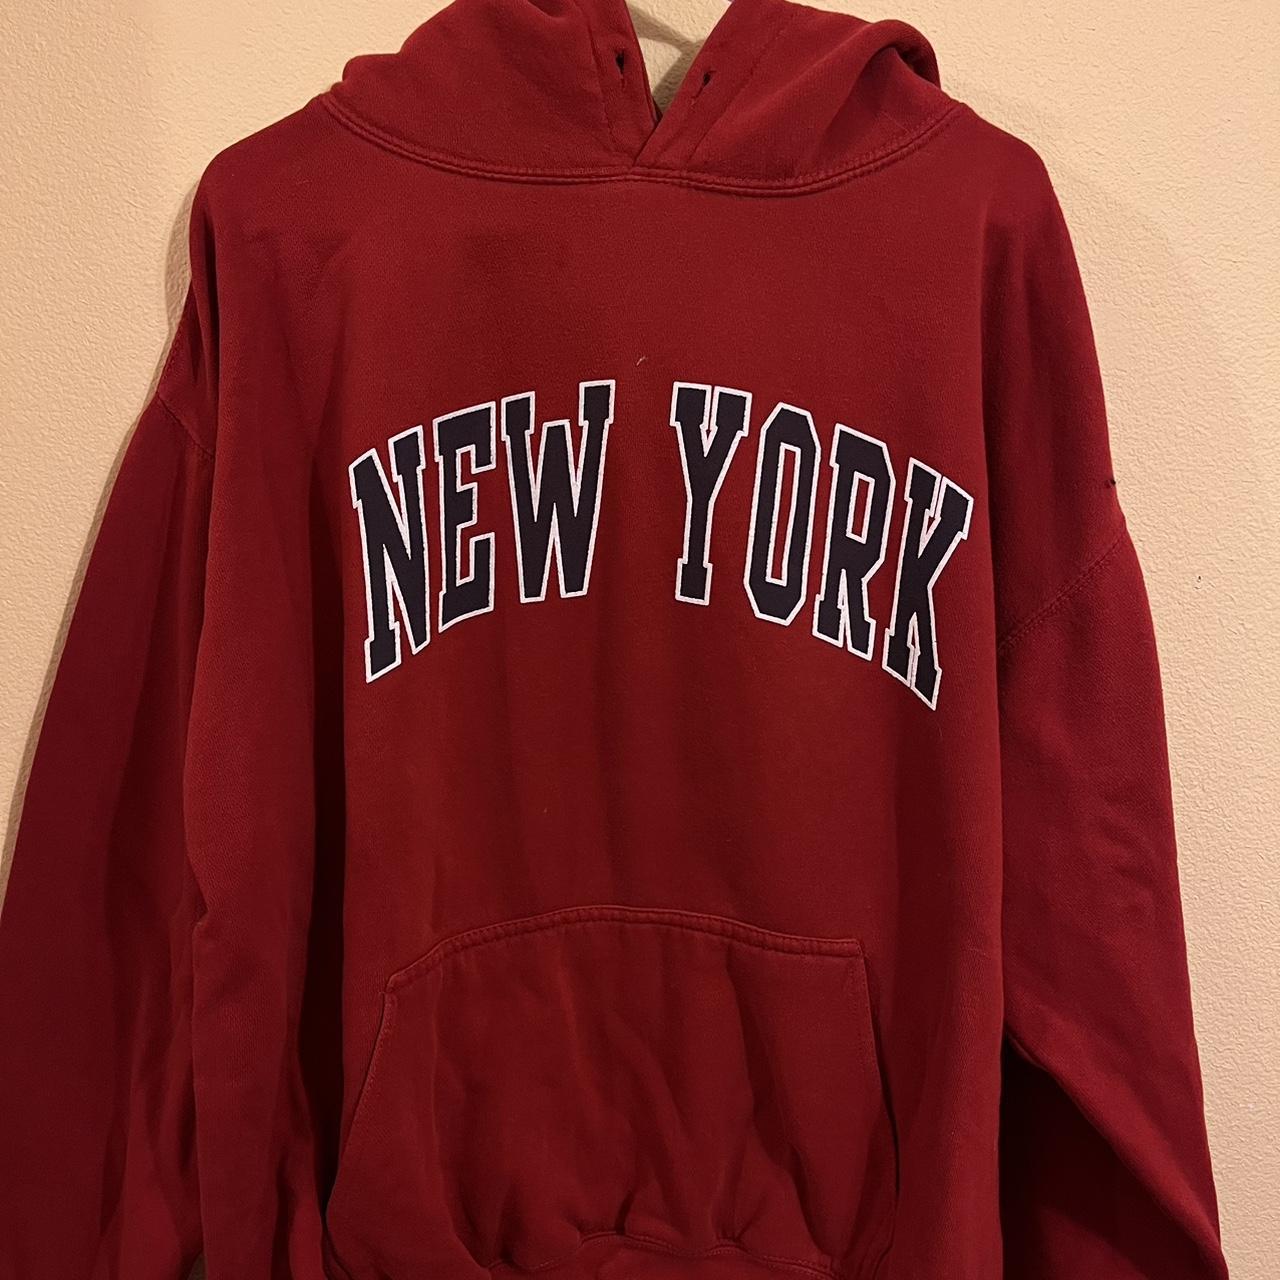 New York Hoodie - Red